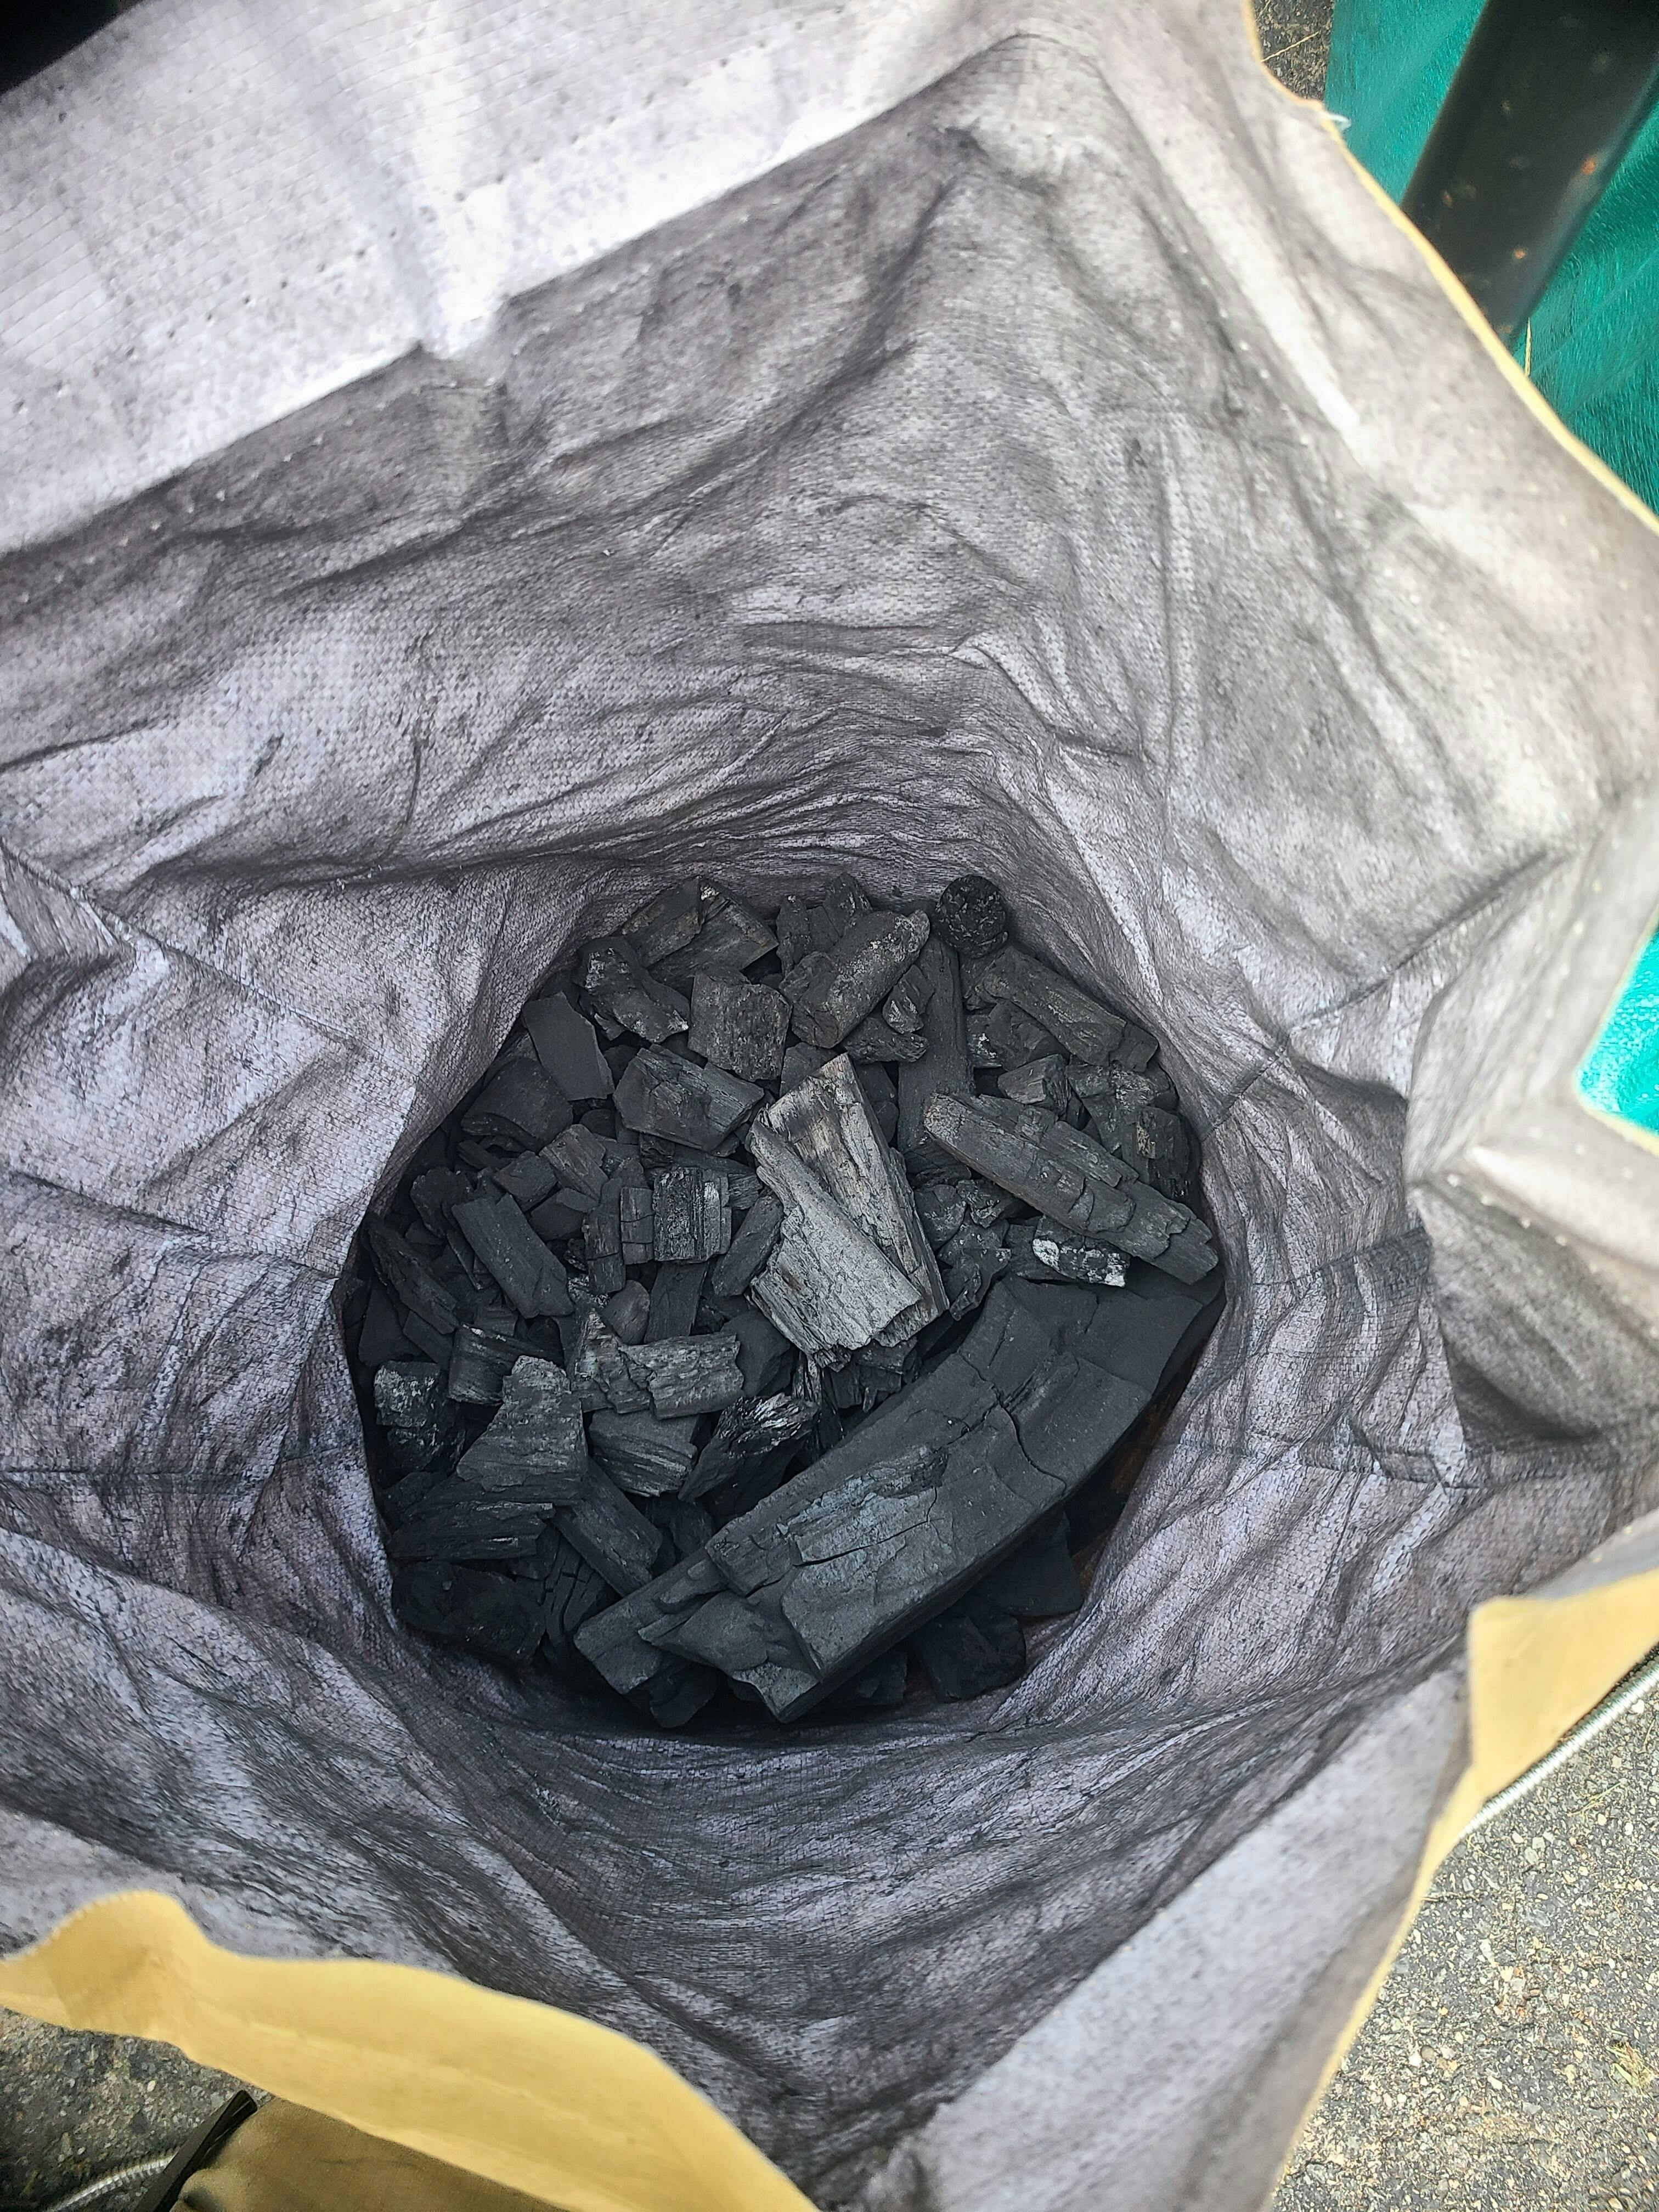 FOGO Briquets (2 bags of 15.4lbs) –